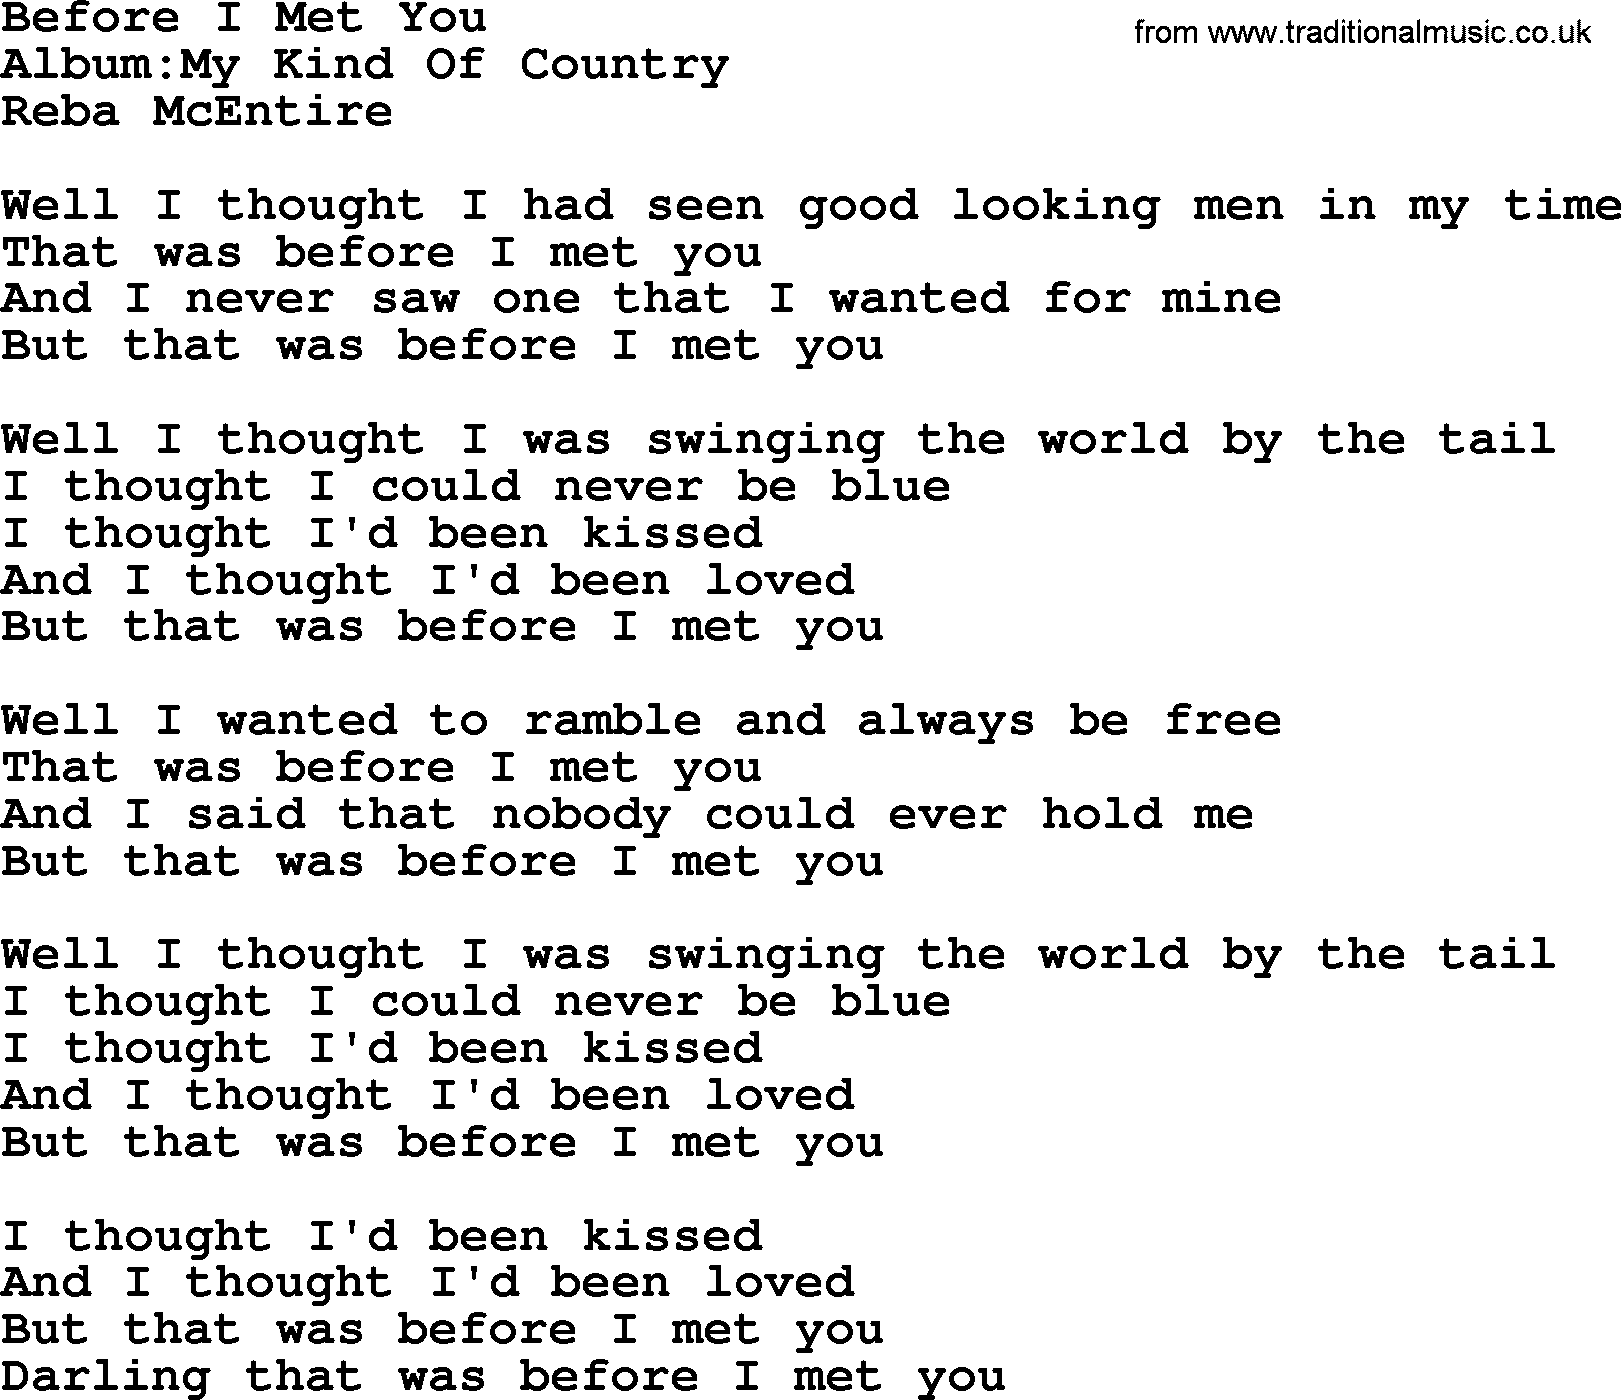 Reba McEntire song: Before I Met You lyrics